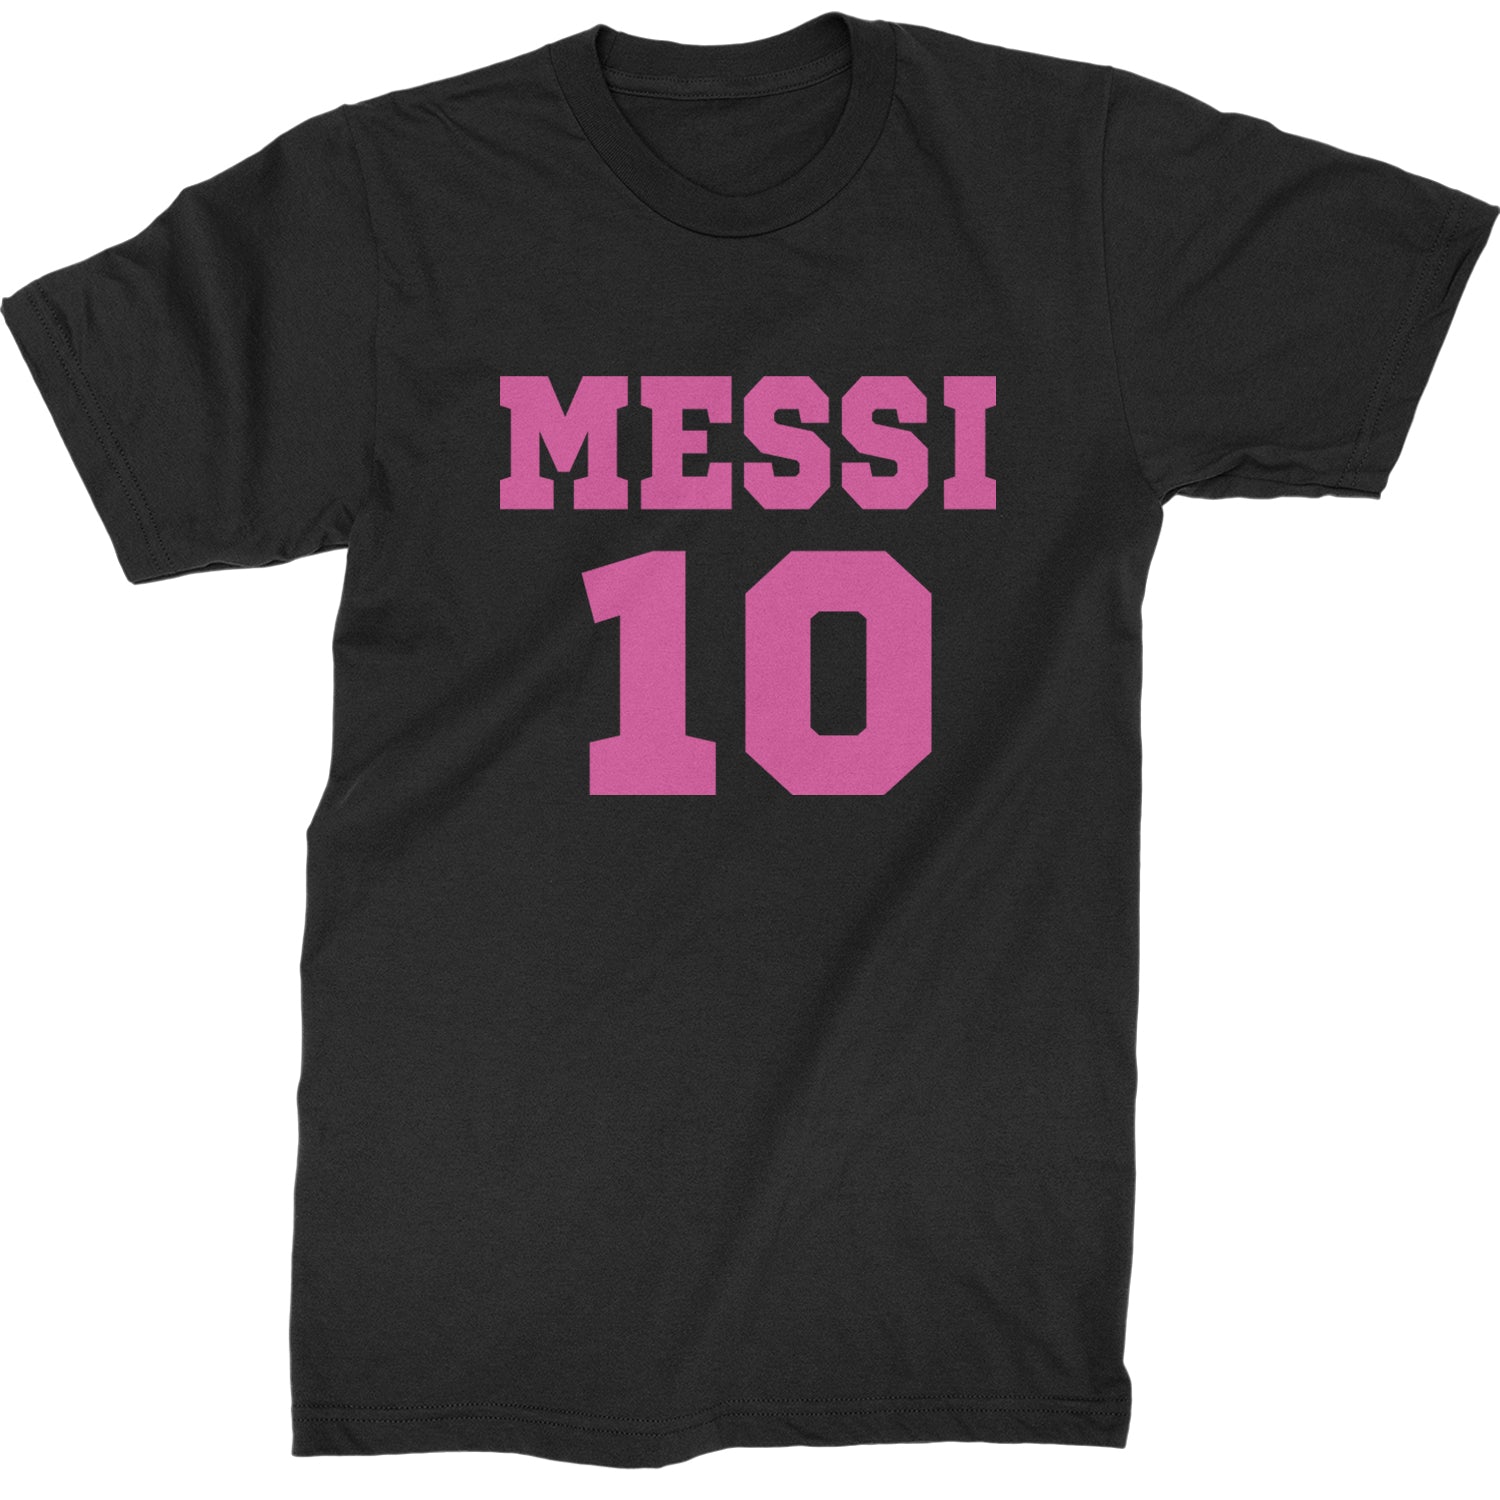 Messi World Soccer Futbol Messiami Mens T-shirt